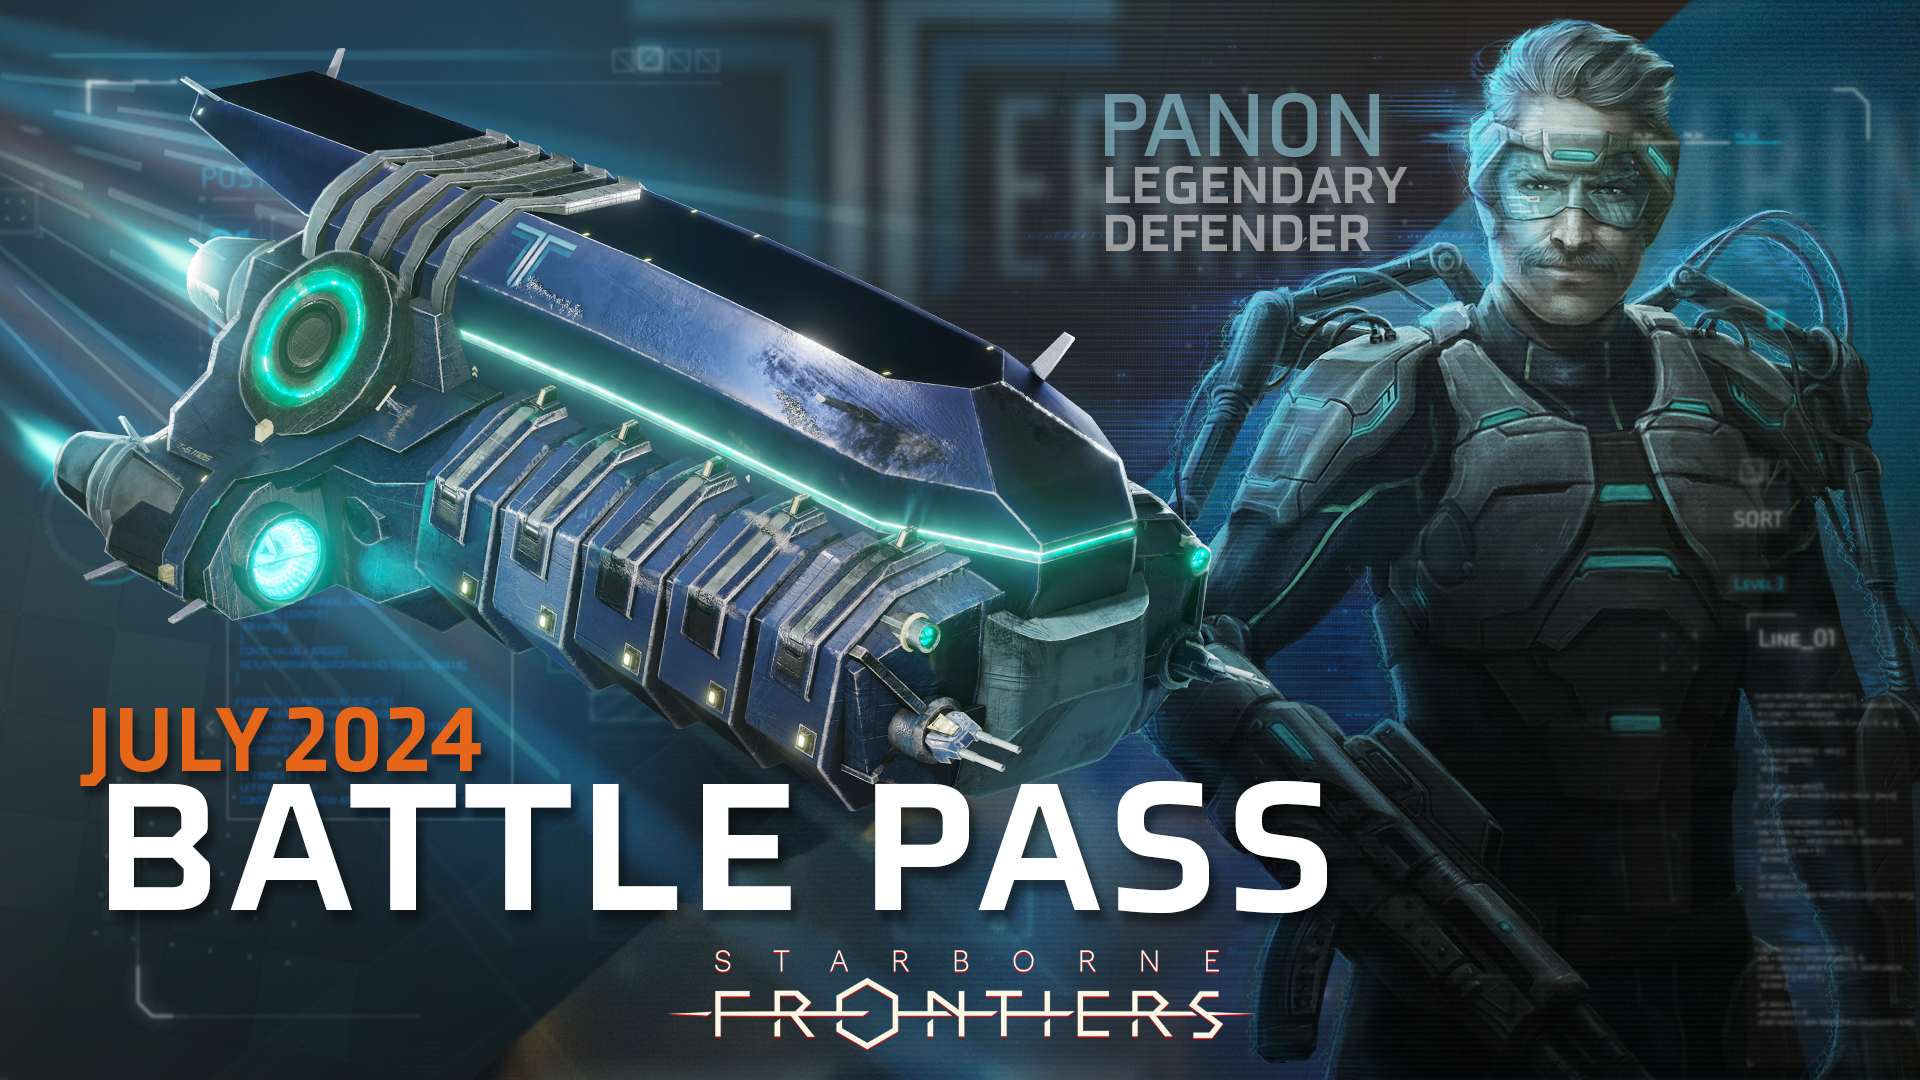 Battle Pass - Panon